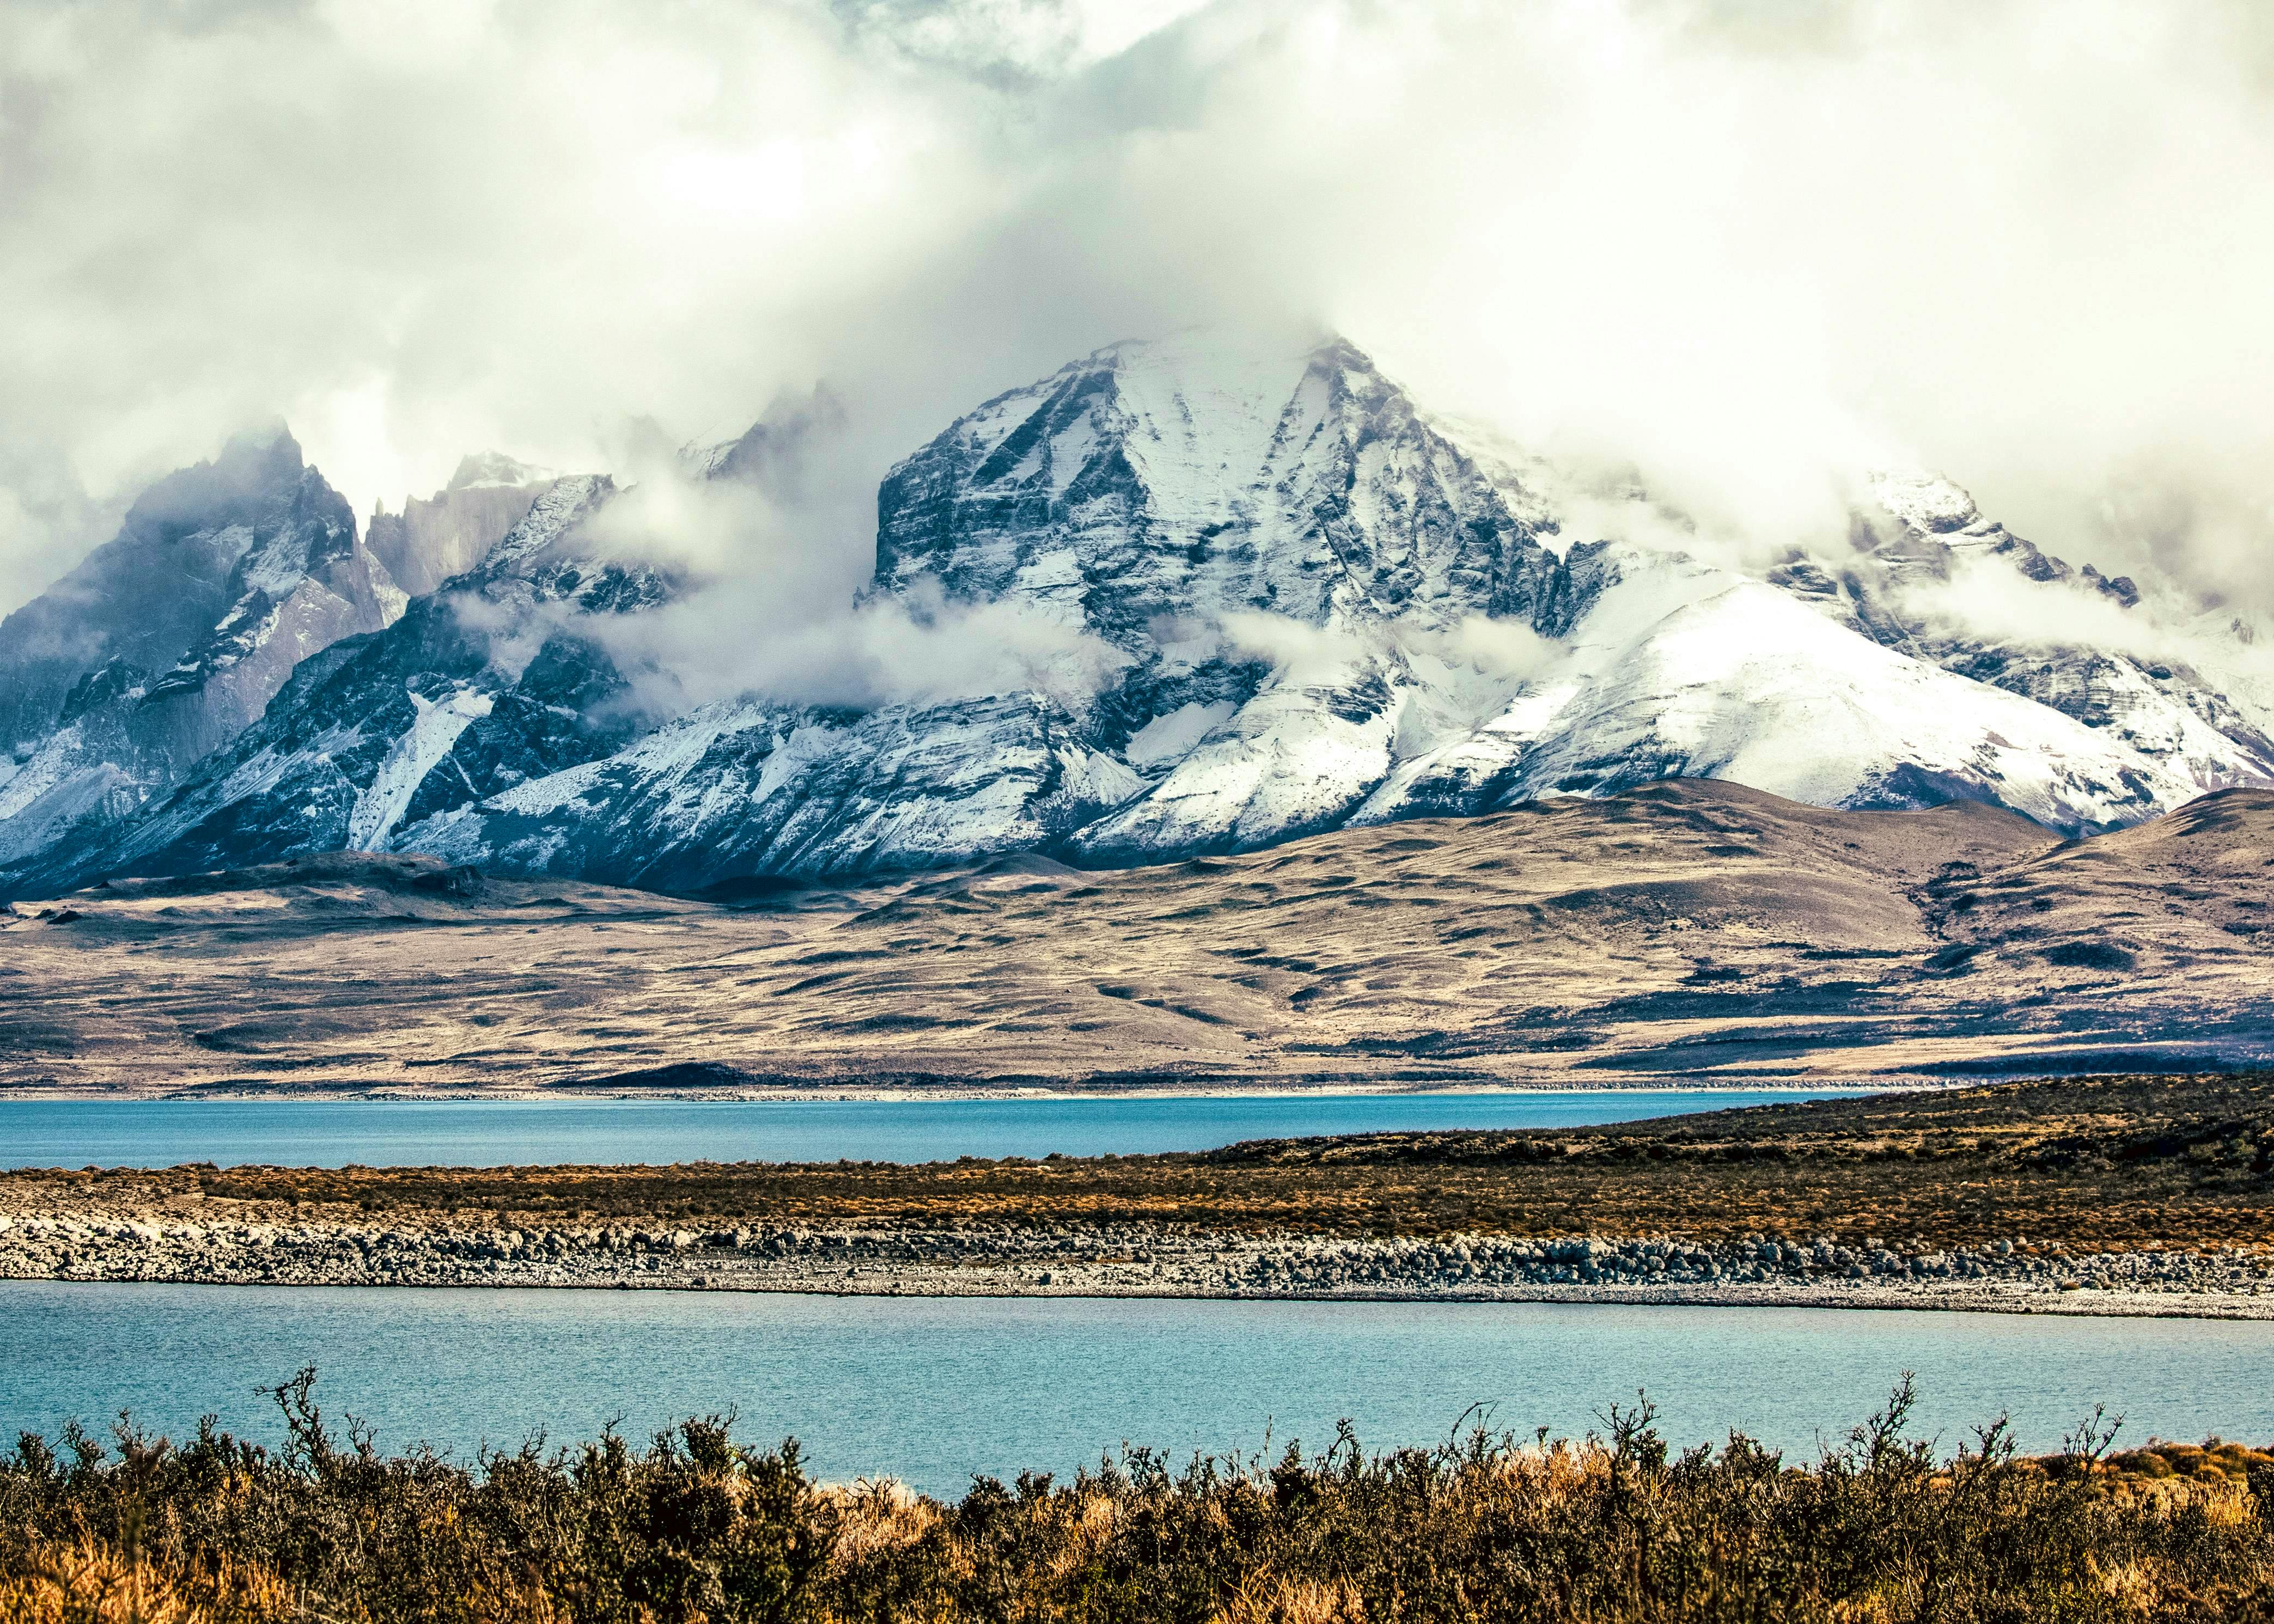 Patagonia adventure holidays